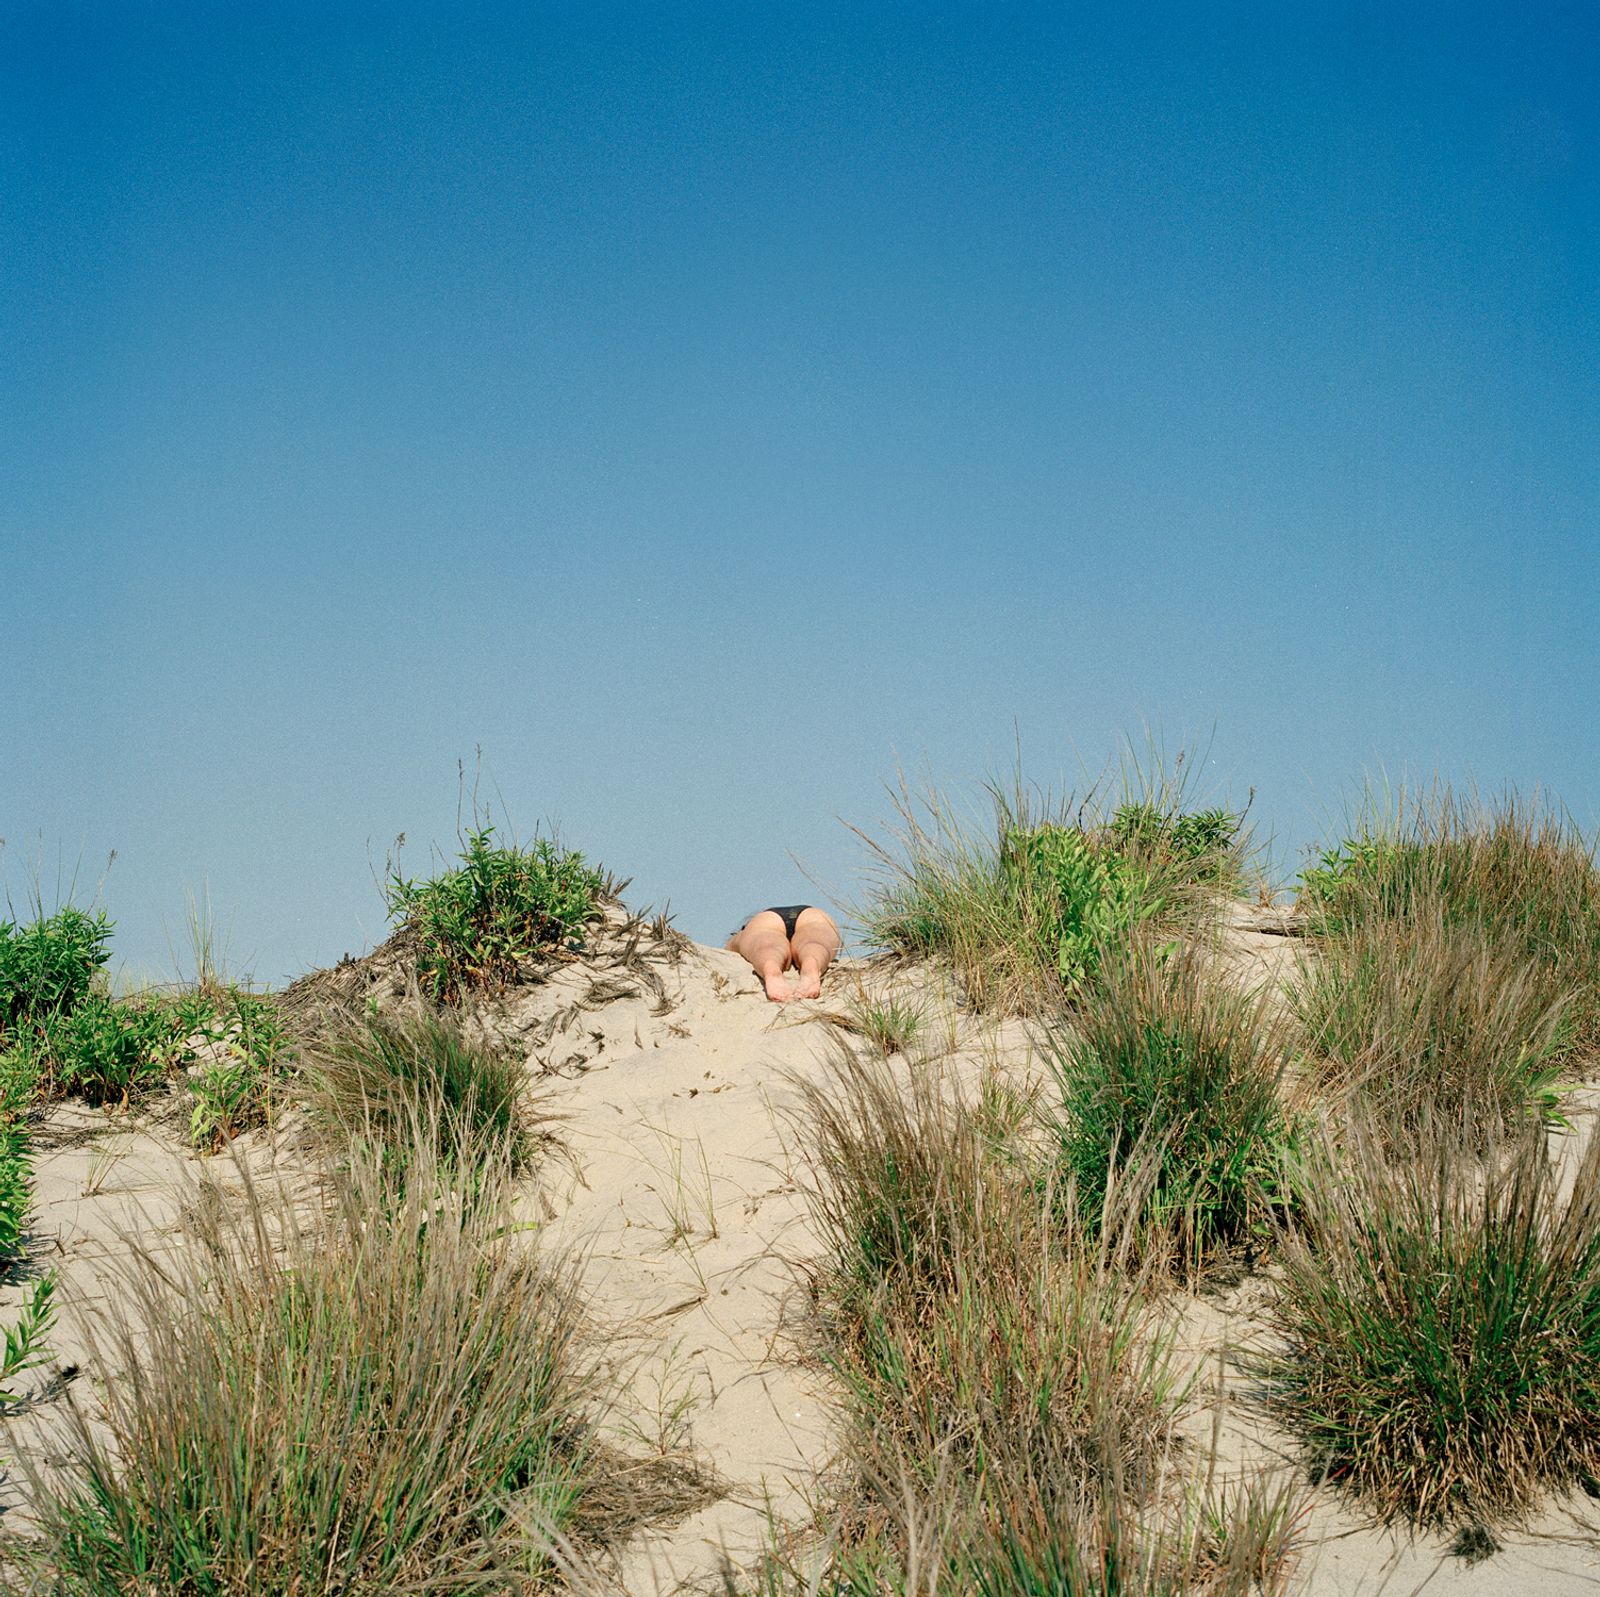 © Alana Celii - Self Portrait in the Dunes, 2010